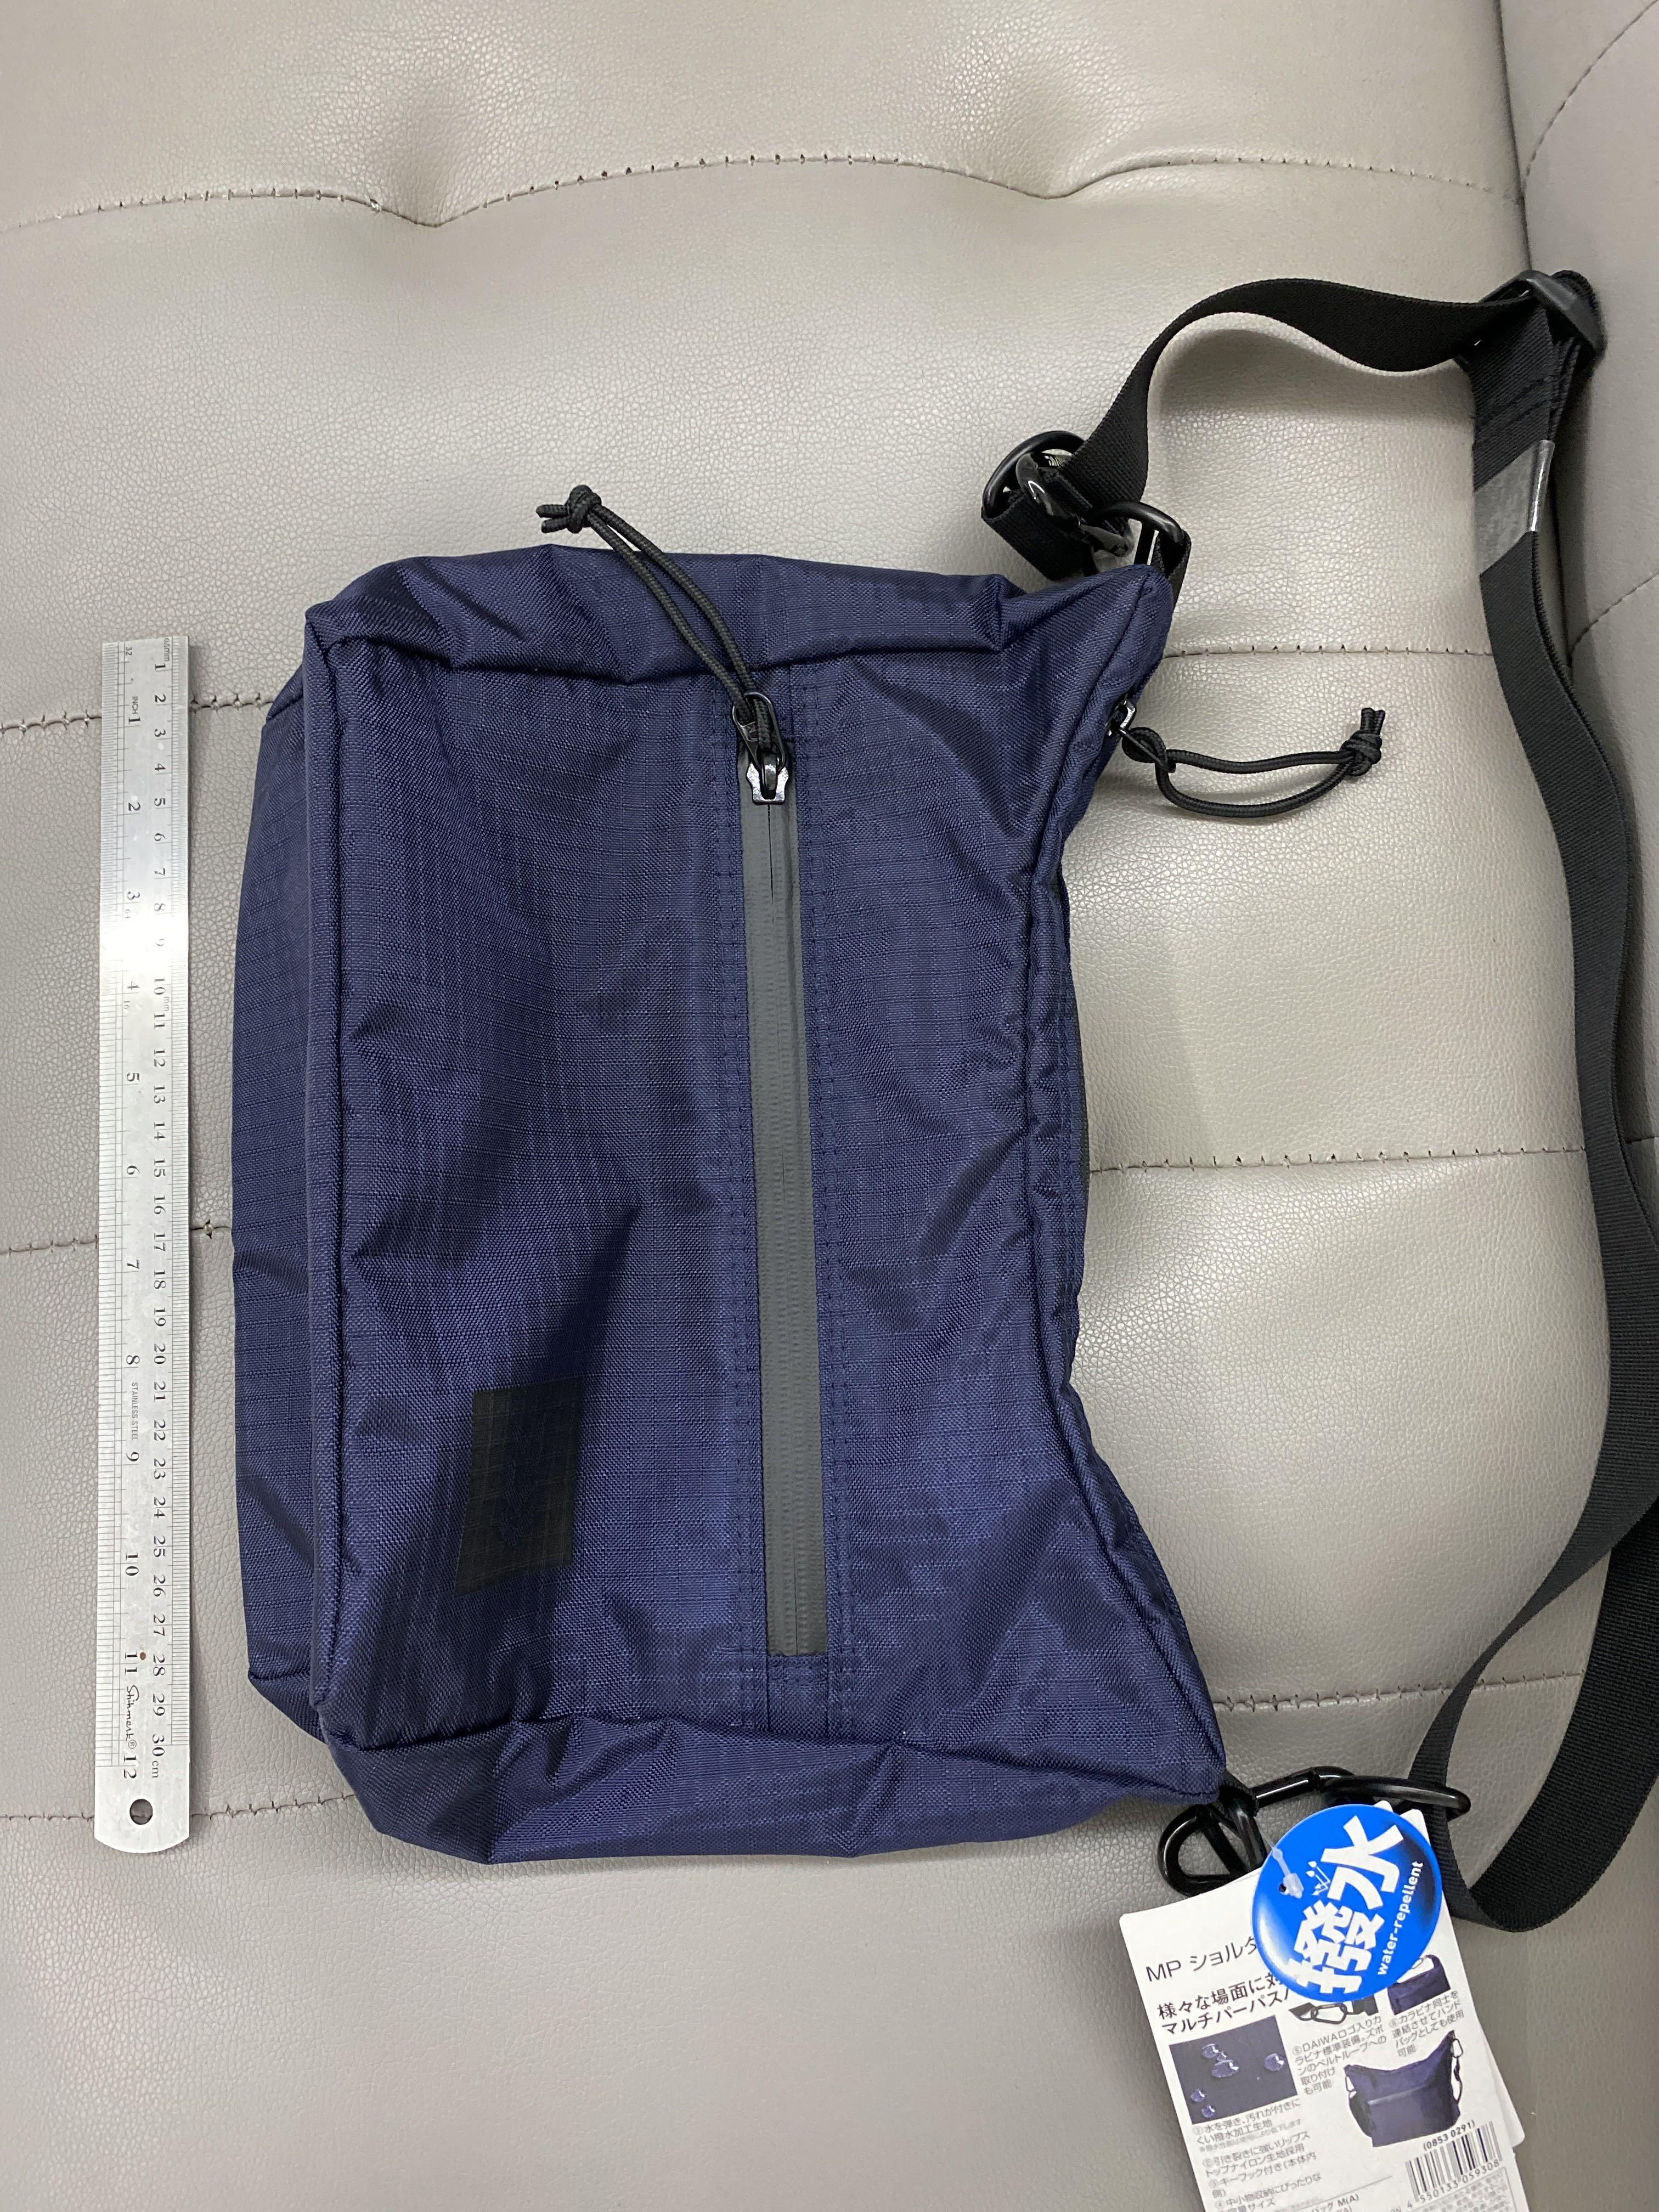 Daiwa Fishing Tackle Bag, Sports Equipment, Fishing on Carousell